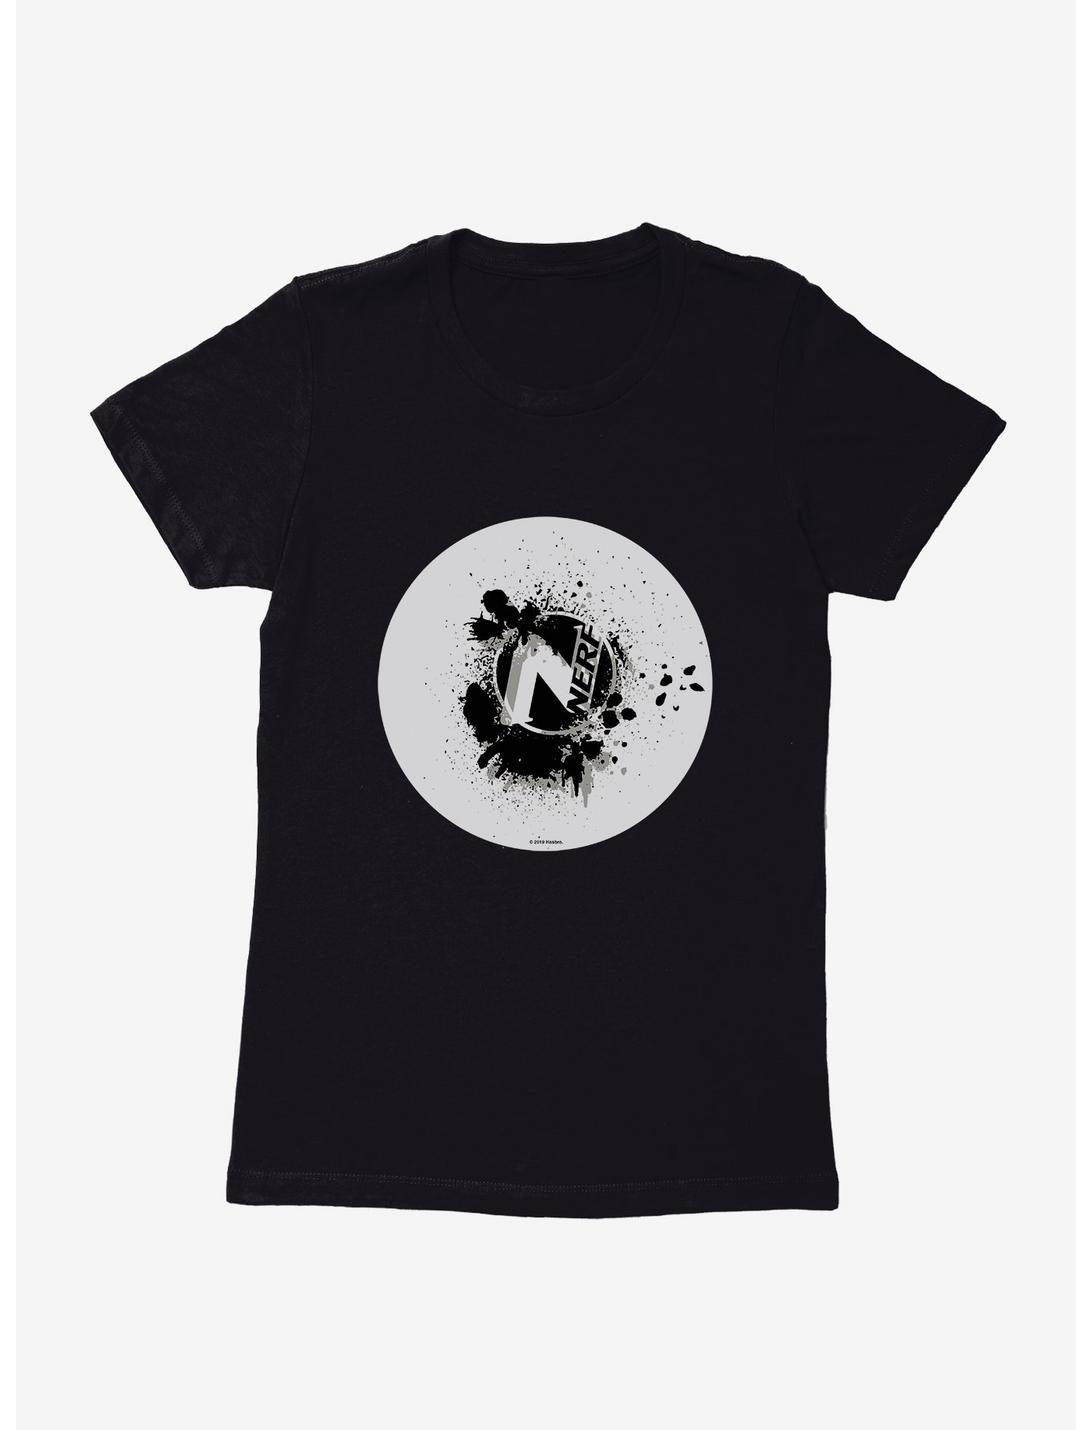 Nerf Ink Splatter Graphic Womens T-Shirt, BLACK, hi-res